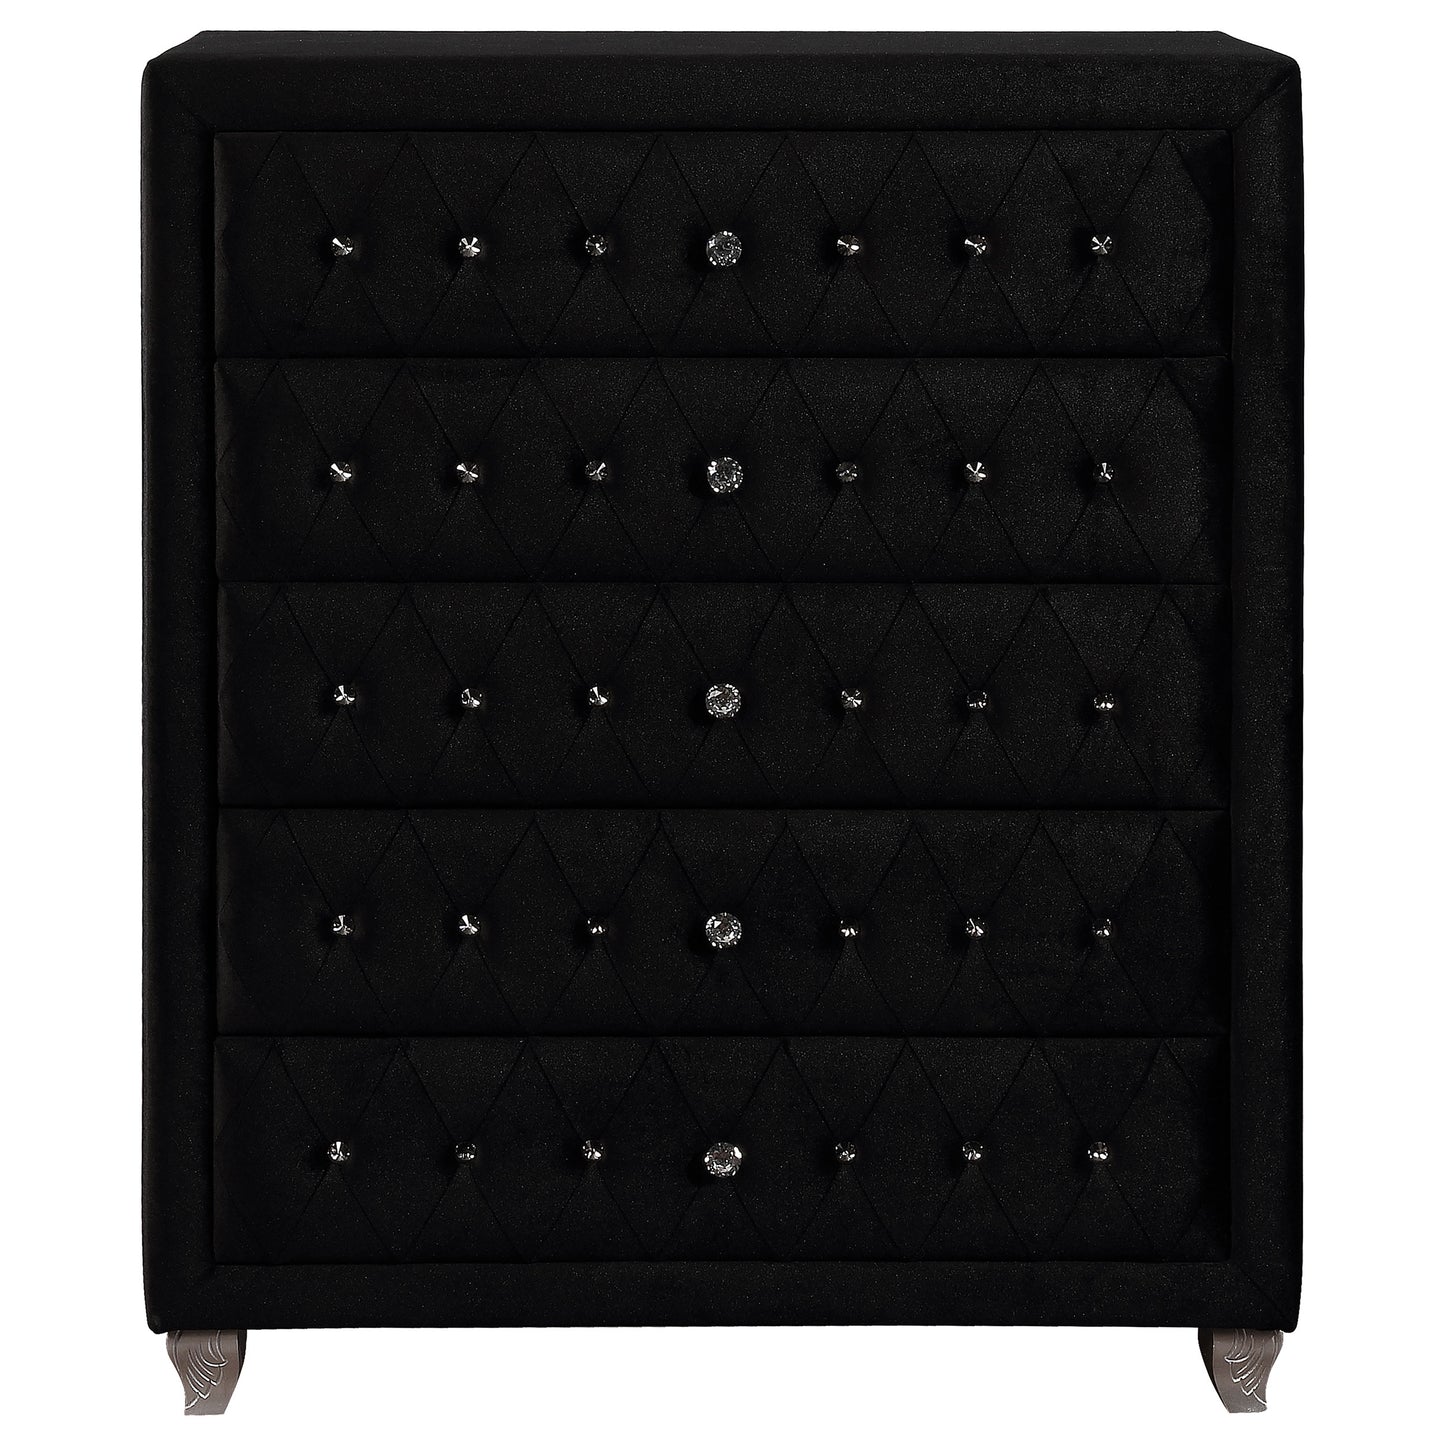 Deanna Deanna 5-drawer Rectangular Chest Black